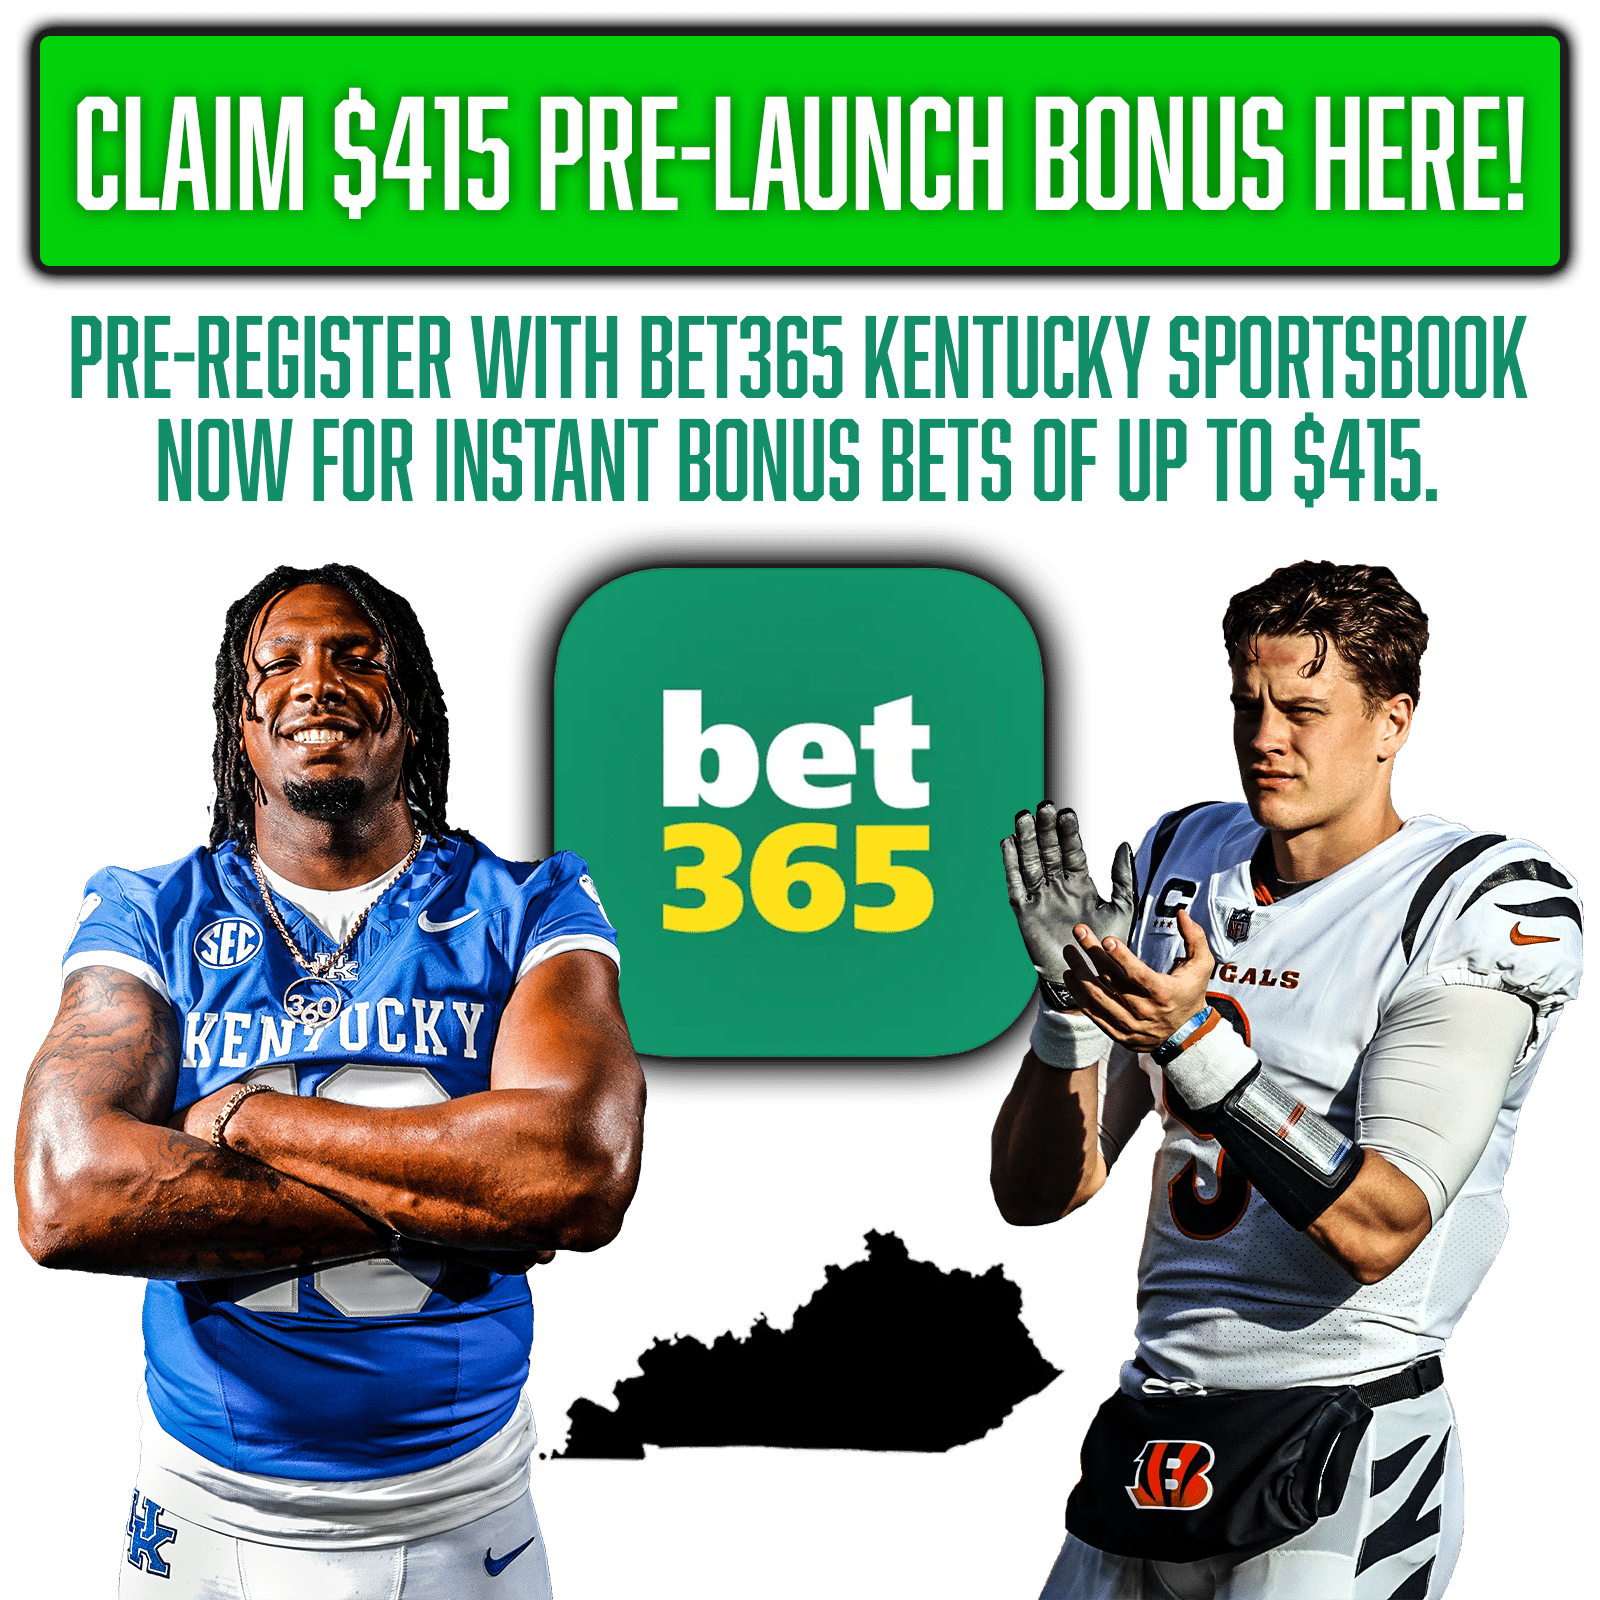 bet365 Kentucky Pre-Registration Bonus: Up To $415 in Bonus Bets